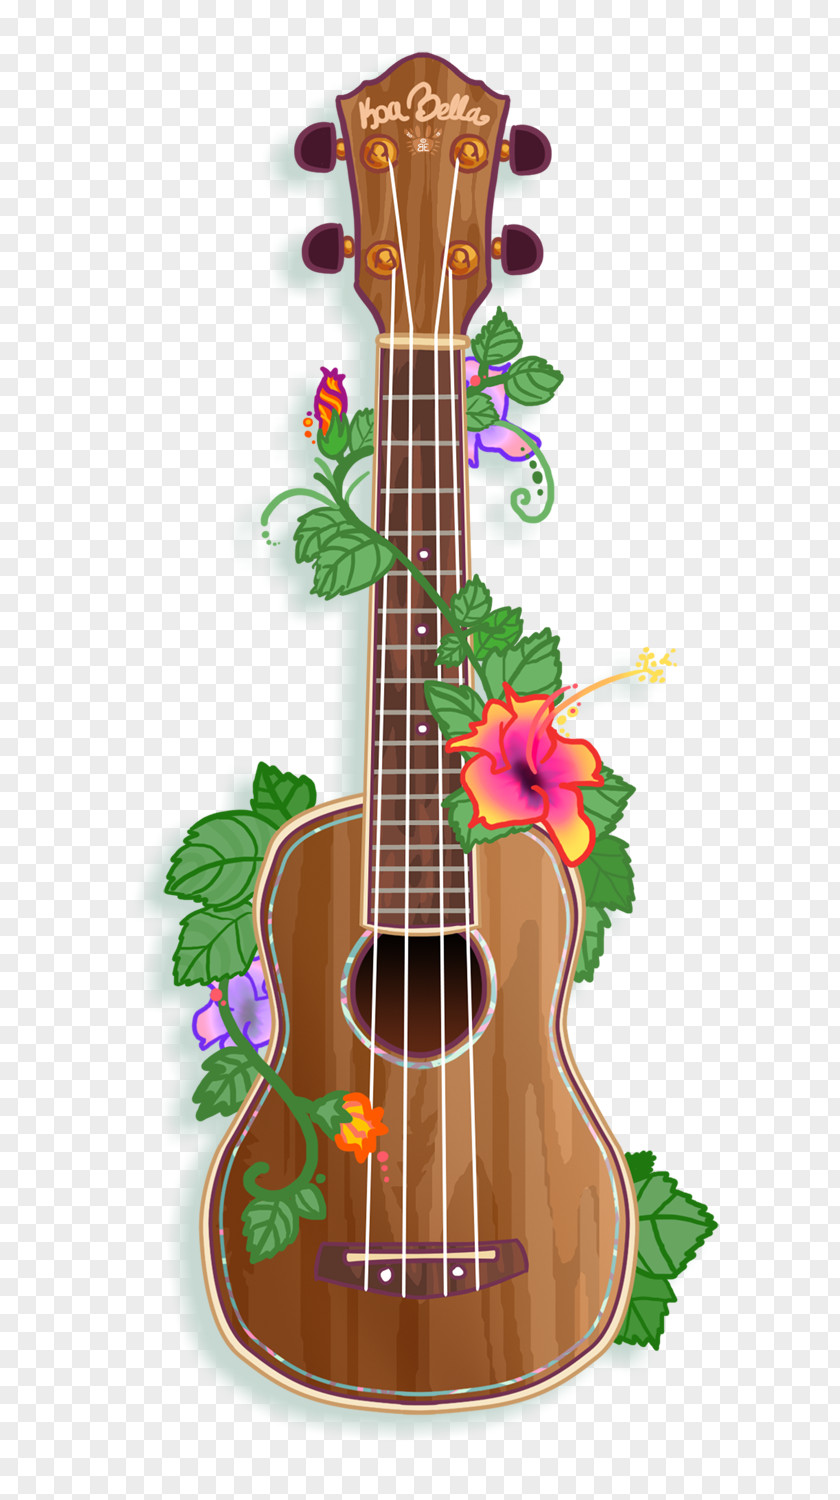 Hawaii Flower Ukulele Acoustic Guitar Musical Instruments PNG